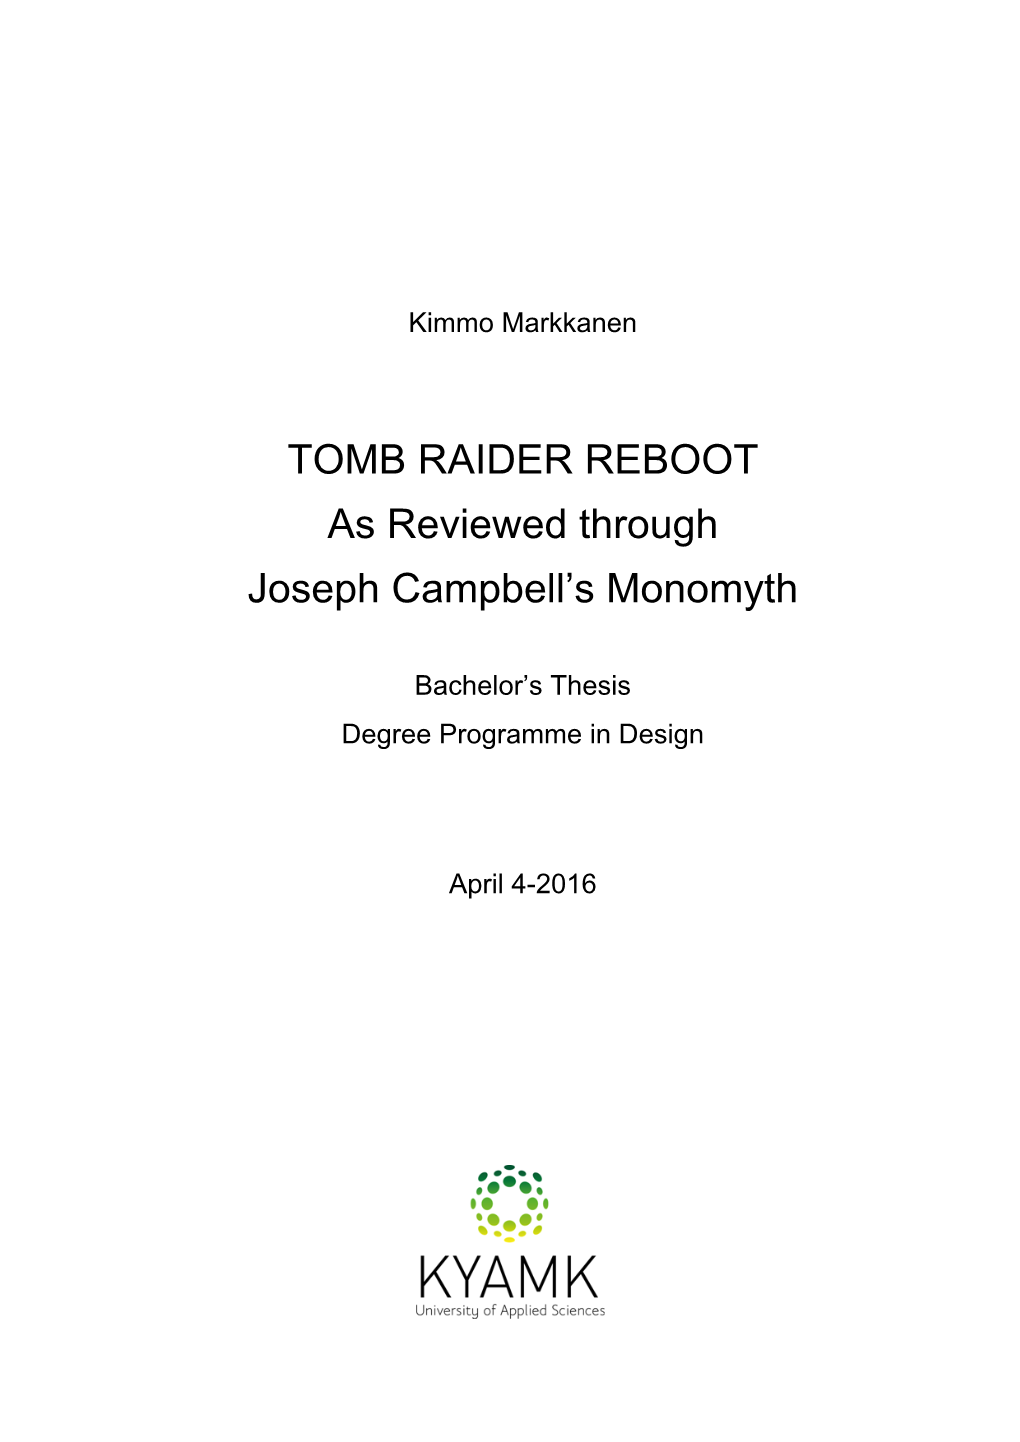 TOMB RAIDER REBOOT As Reviewed Through Joseph